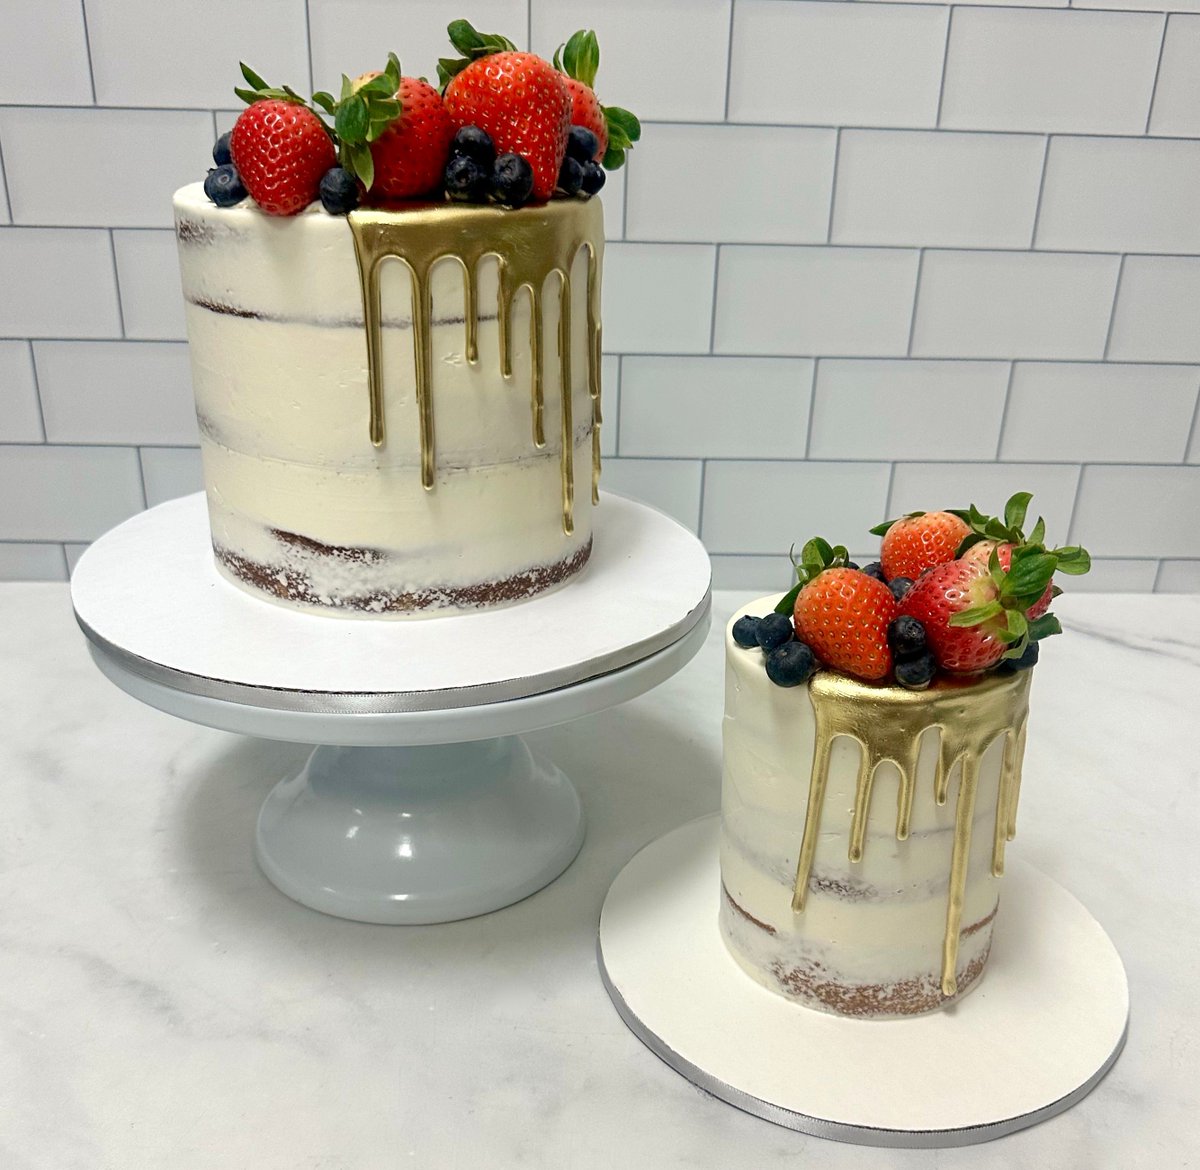 A beautiful gold drip berry cake with matching smash cake that we promise is ok to smash 🍓🌟

#golddrip #kupcakekitchen #wantcake #dripcakes #dripcakeideas #1stbirthdaycake #1stbirthdaycakes #firstbirthdaycake #smashcake #beautifulcakes #amazingcakes #goldcakes #santaclarita